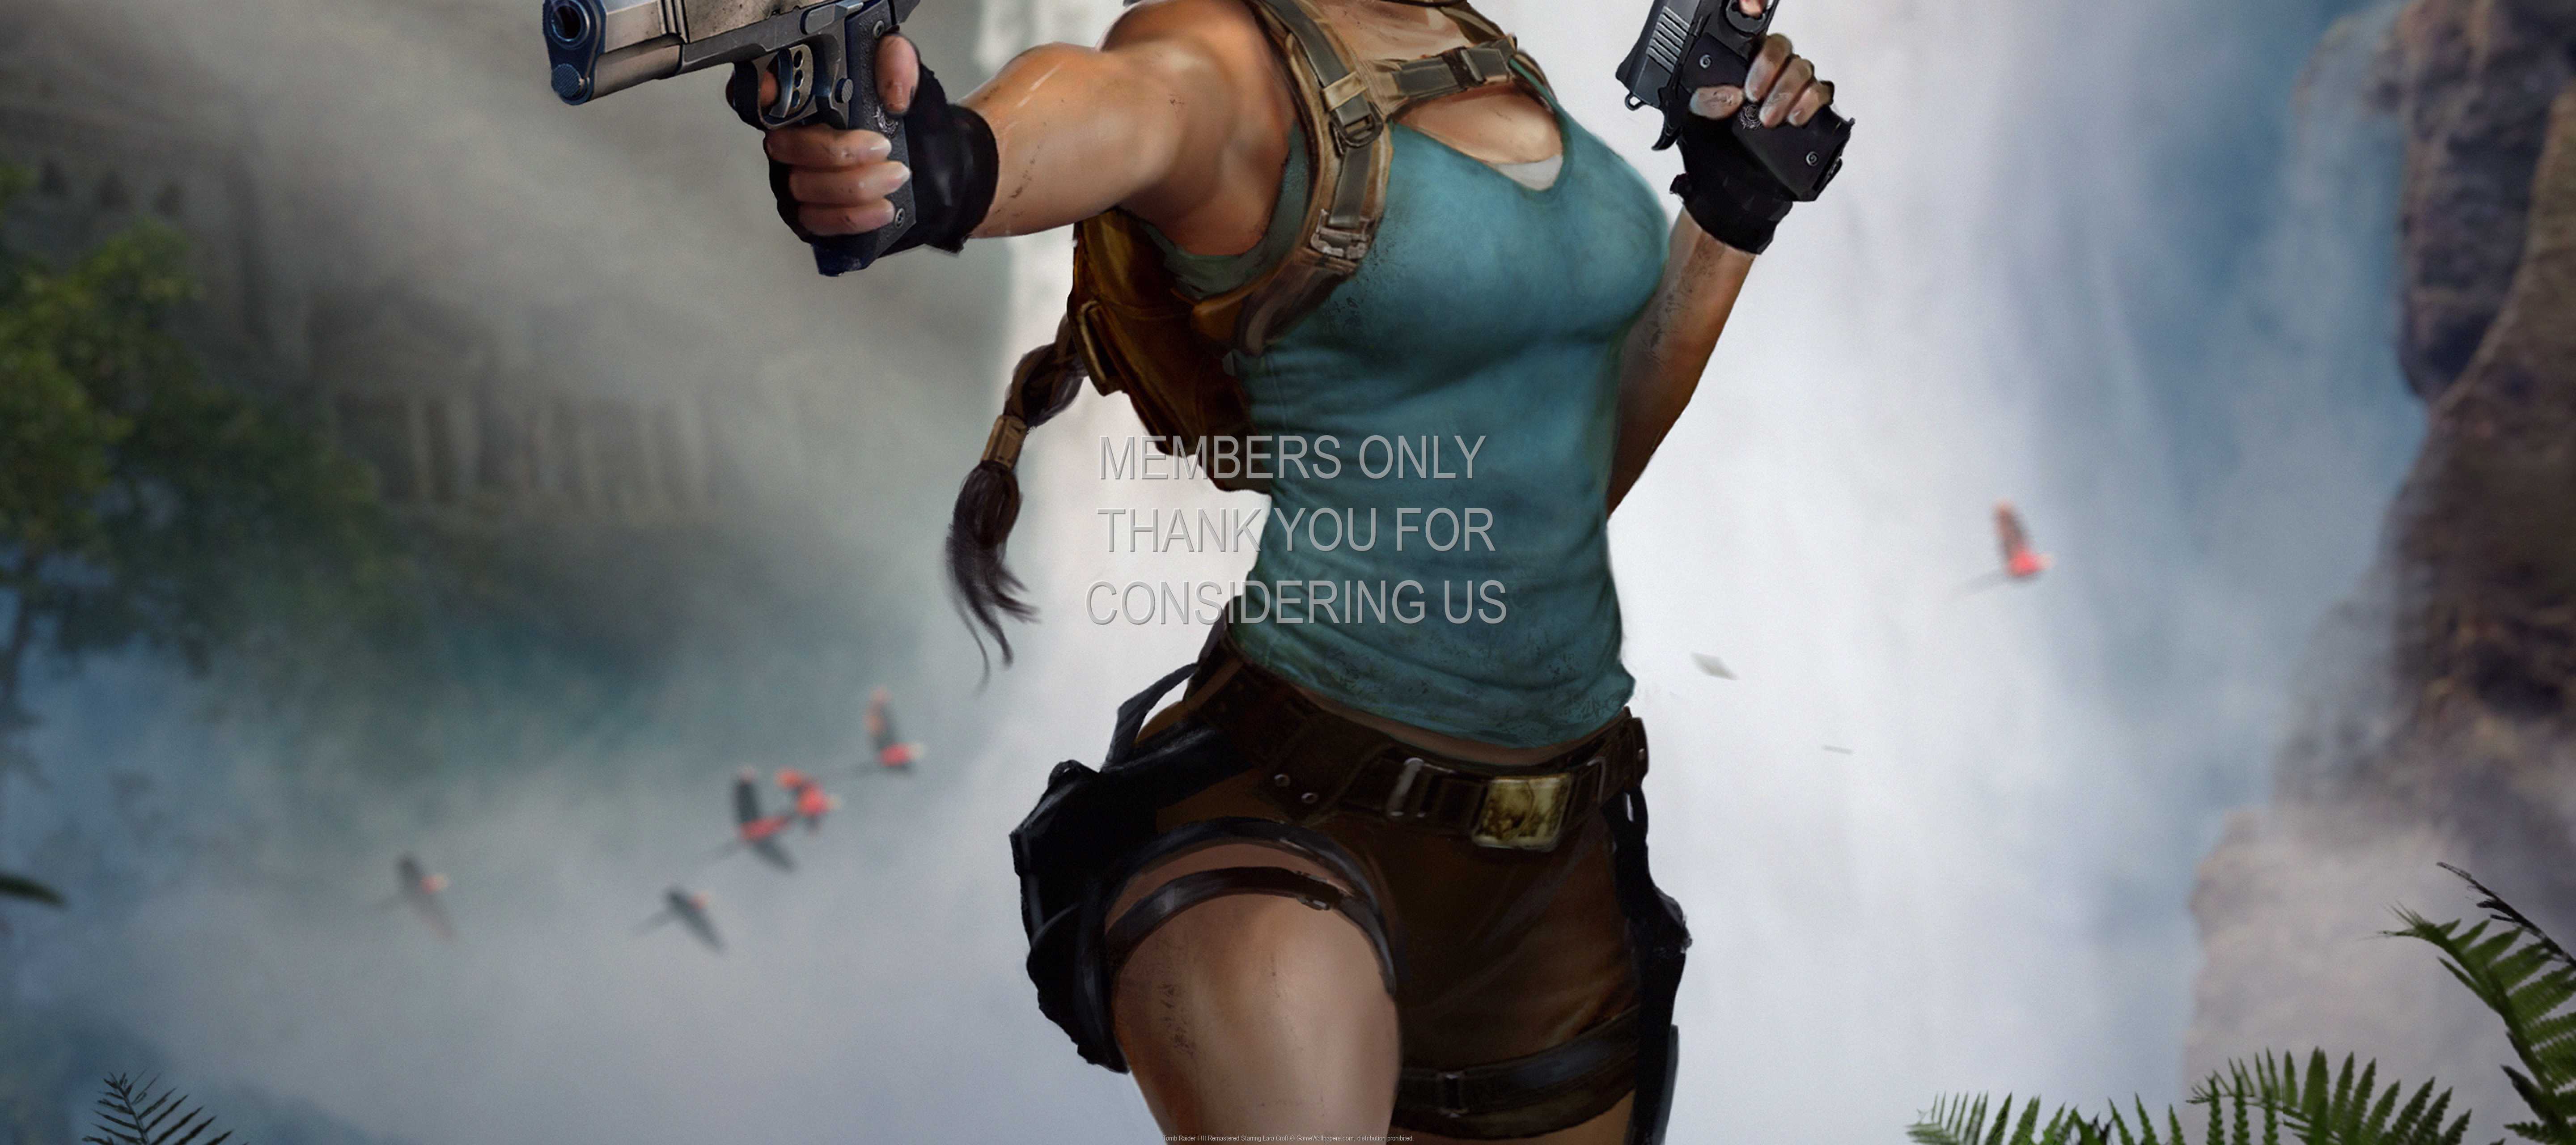 Tomb Raider I-III Remastered Starring Lara Croft 1440p%20Horizontal Mobile wallpaper or background 02